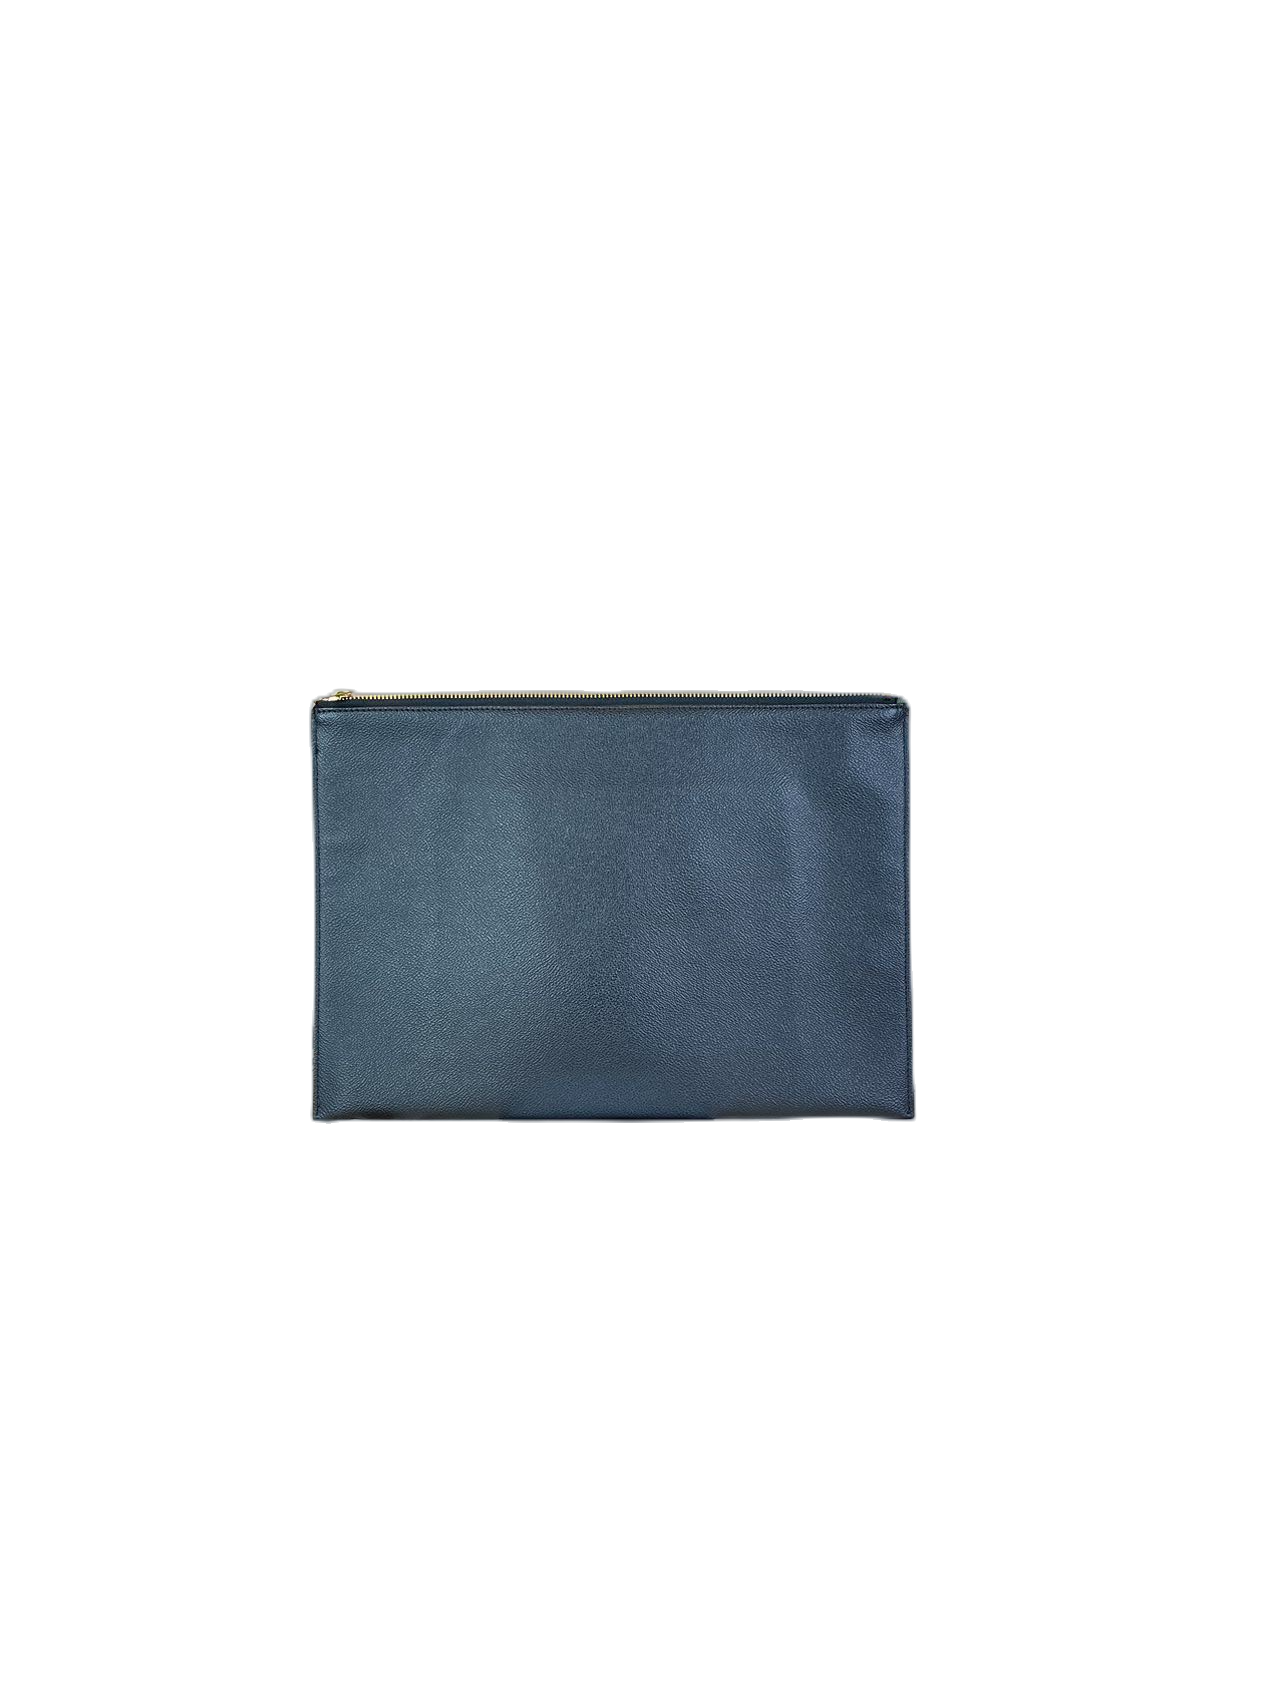 Stella McCartney Black Leather Clutches Pouch Handbag